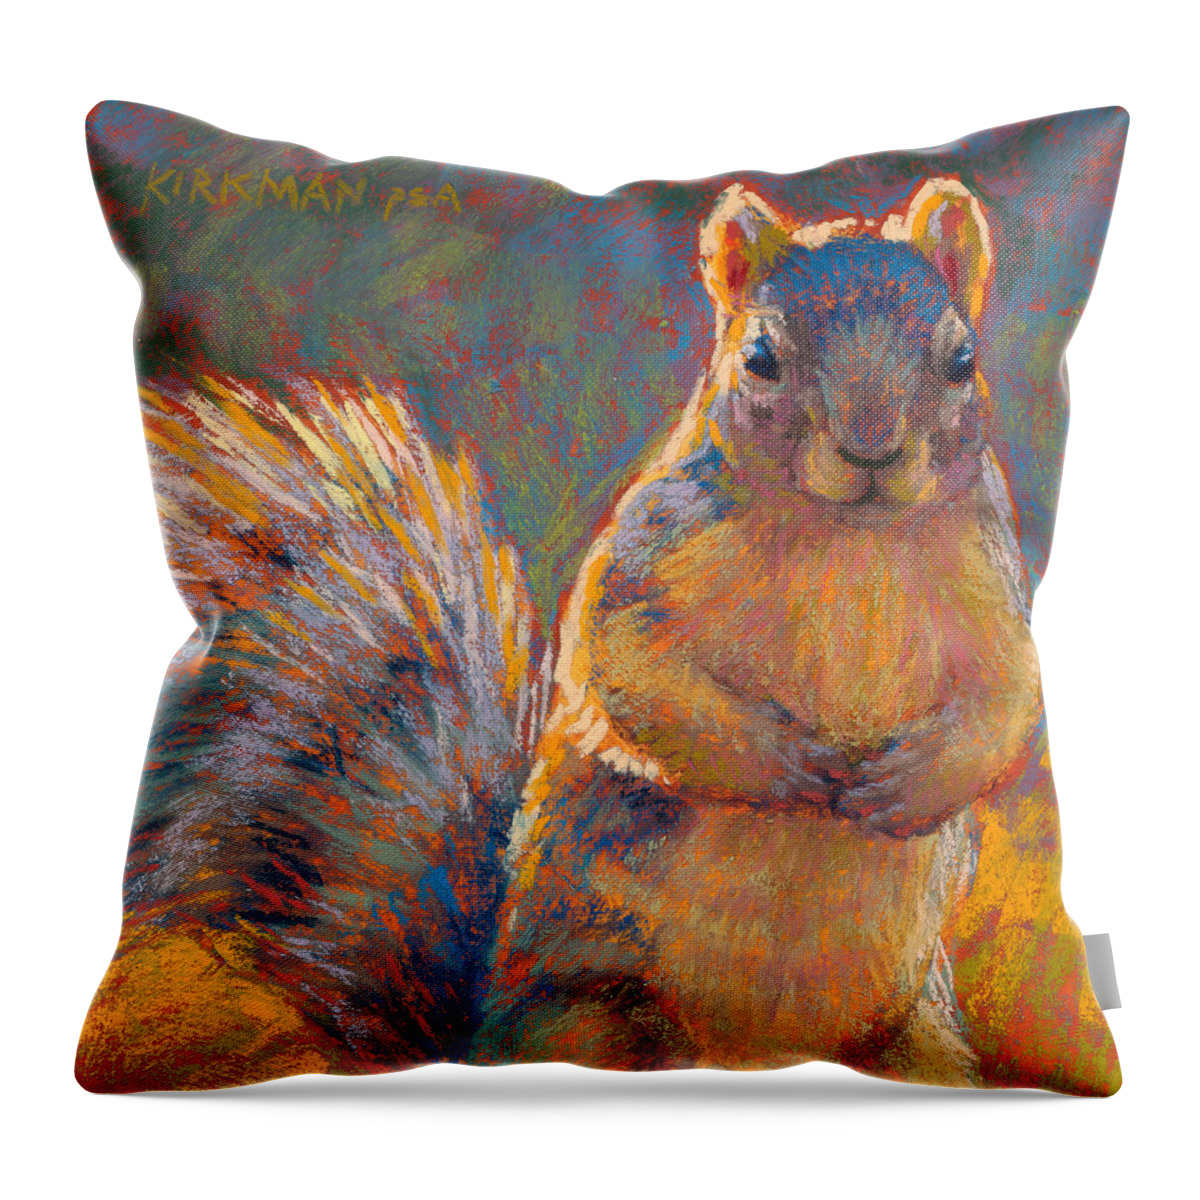 Rita Kirkman Throw Pillow featuring the pastel Got Nuts? by Rita Kirkman